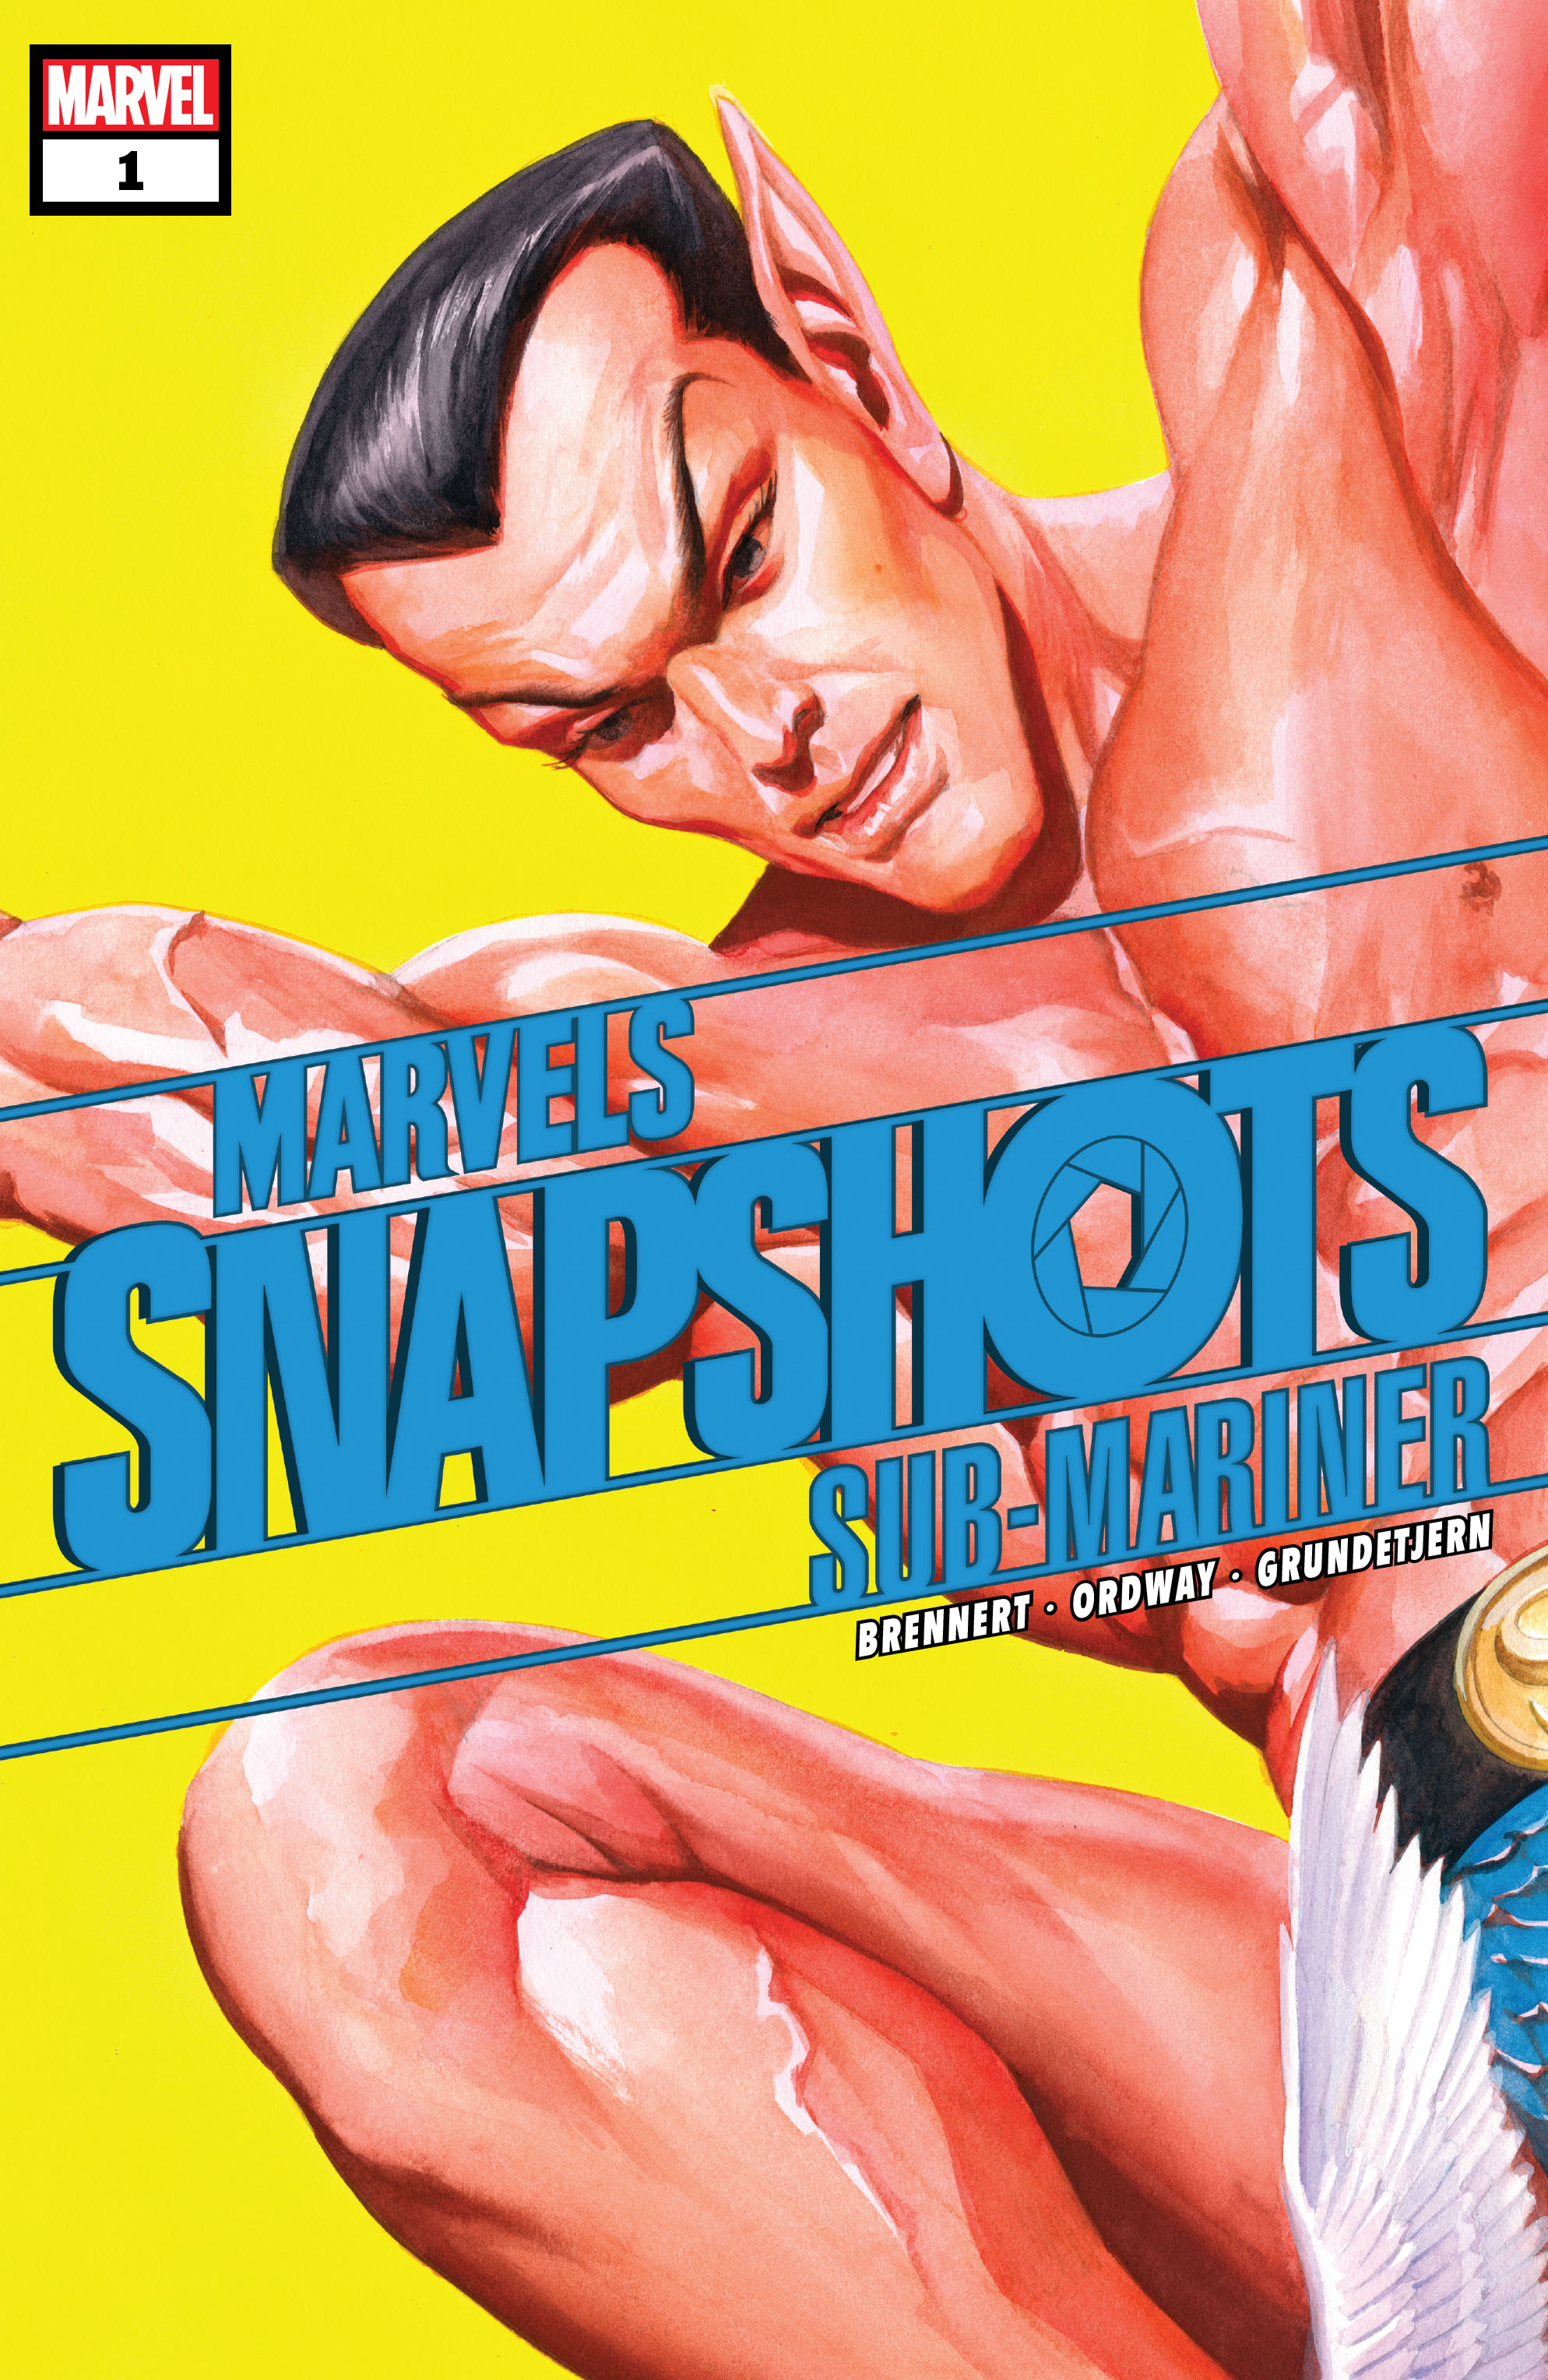 Read online Marvels Snapshot comic -  Issue # Sub-Mariner - 1